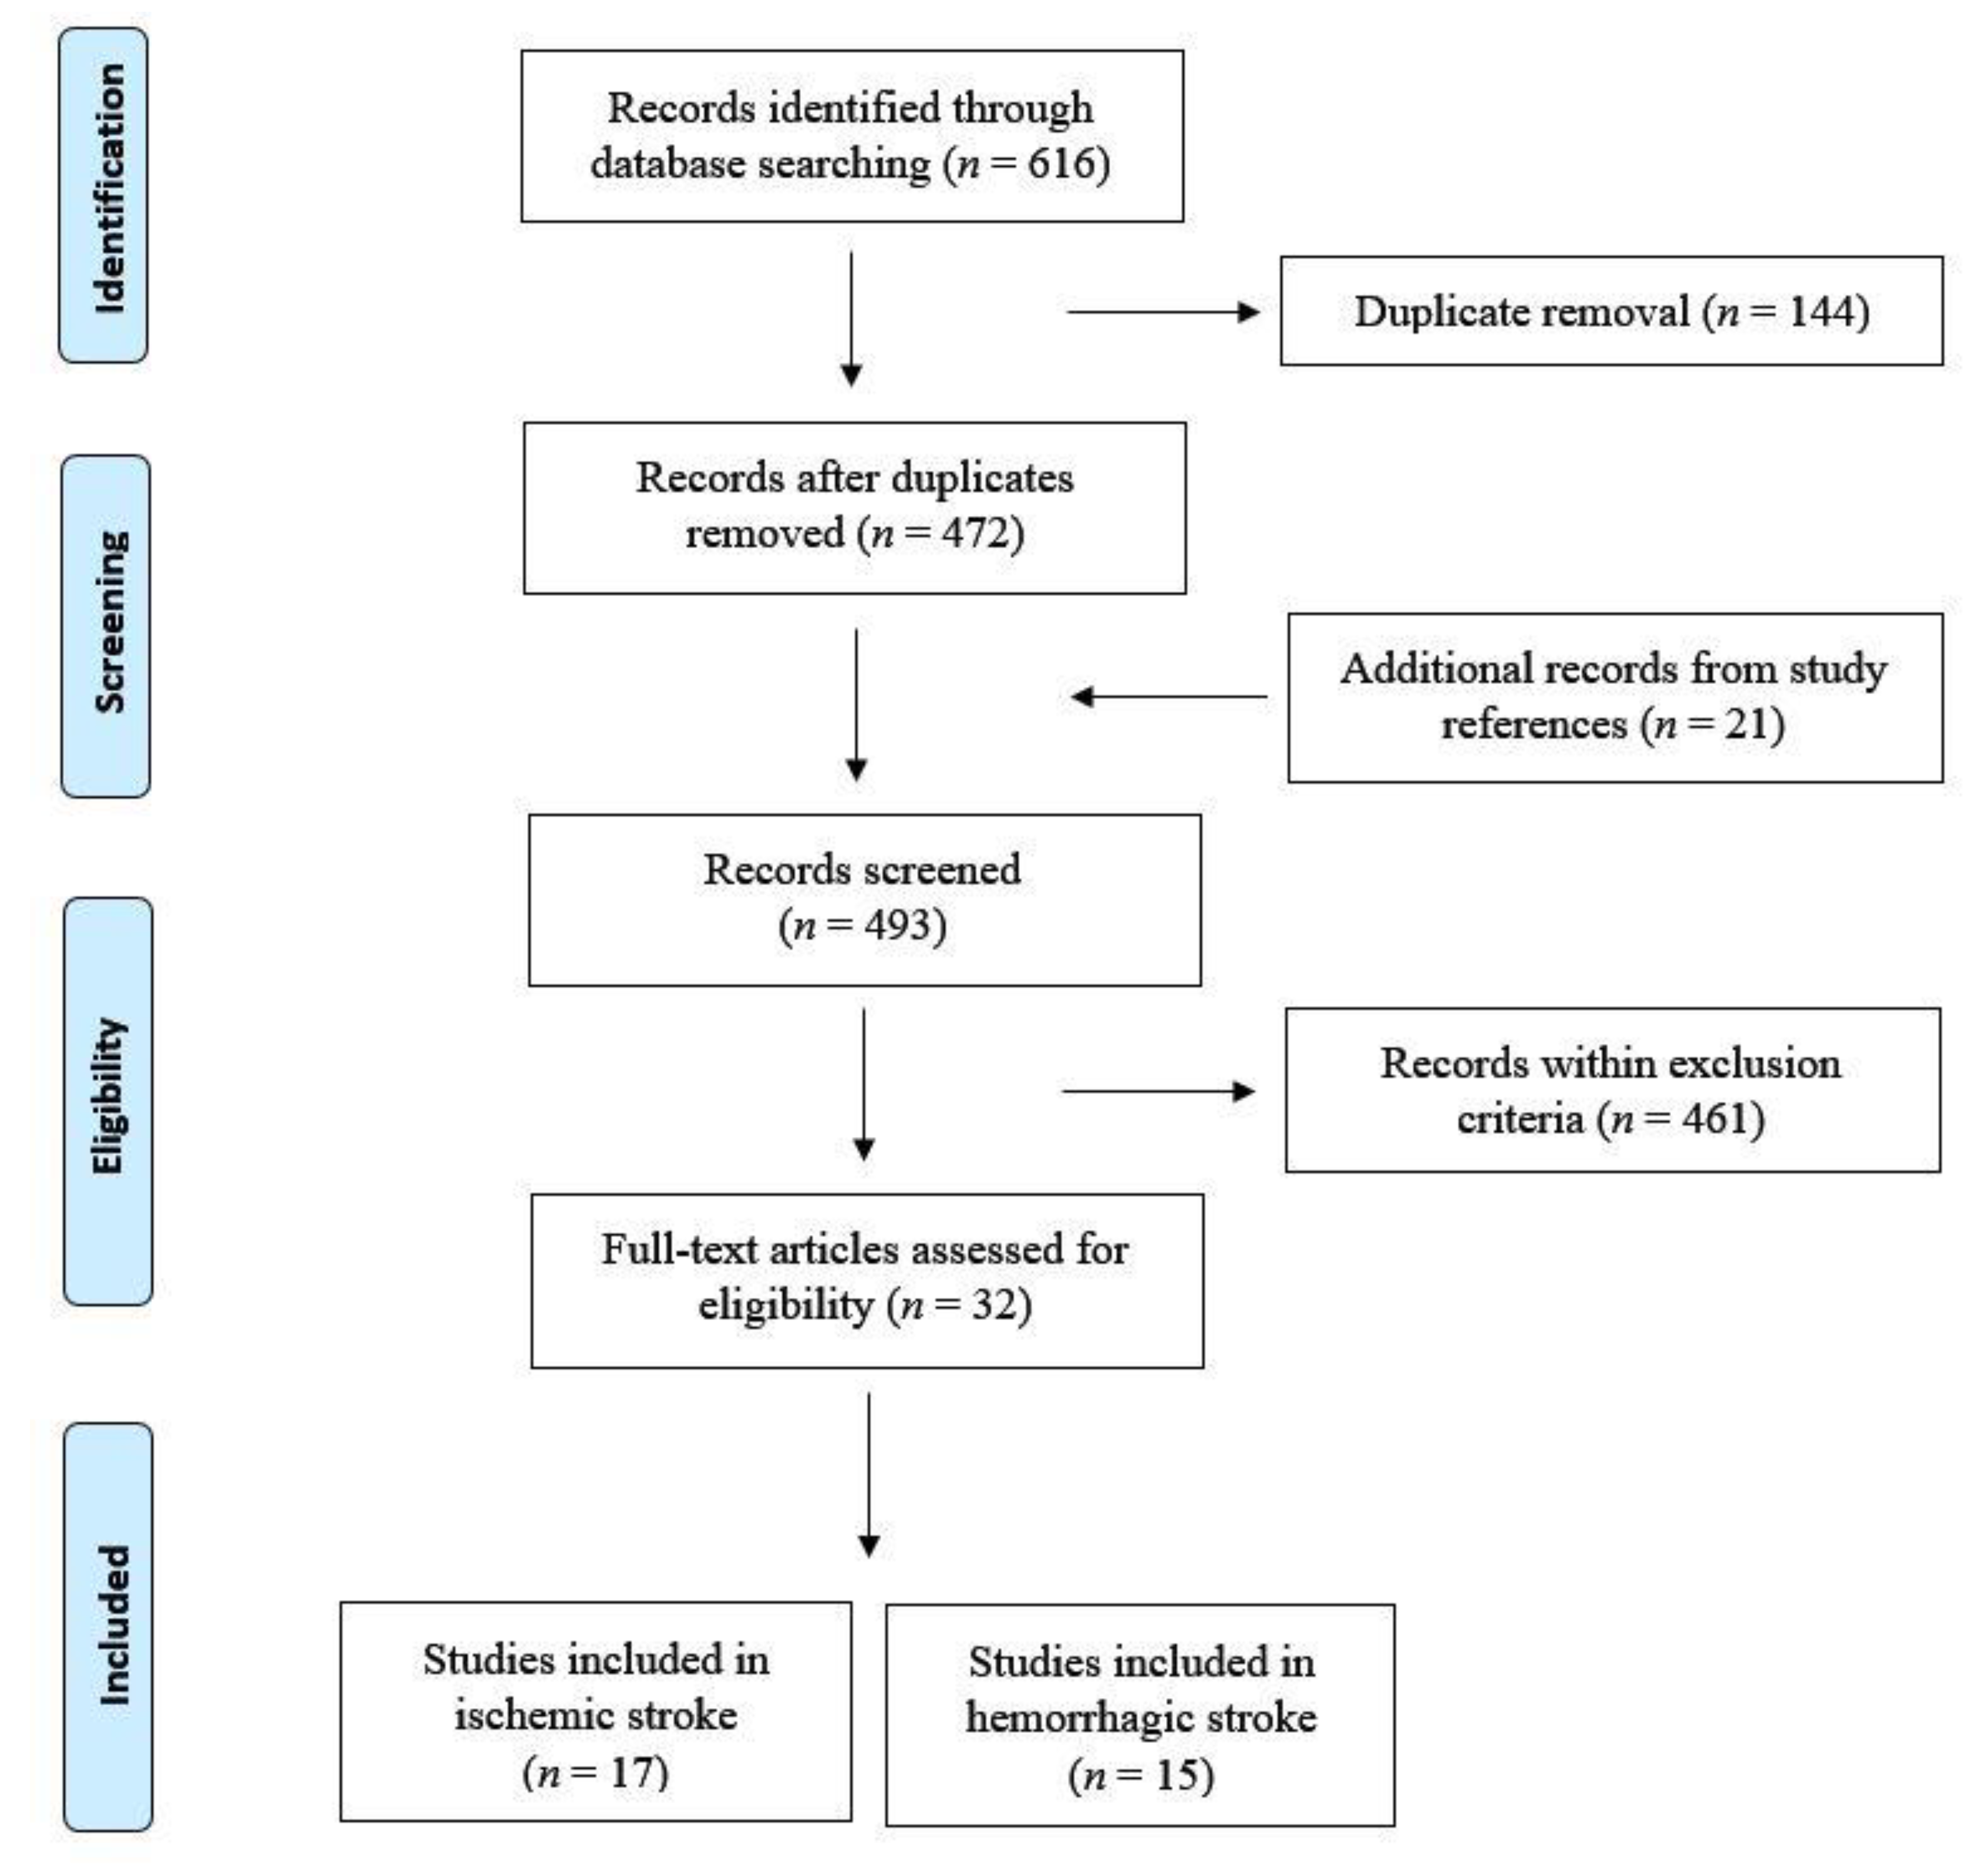 Retrospective evaluation of labetalol as antihypertensive agent in